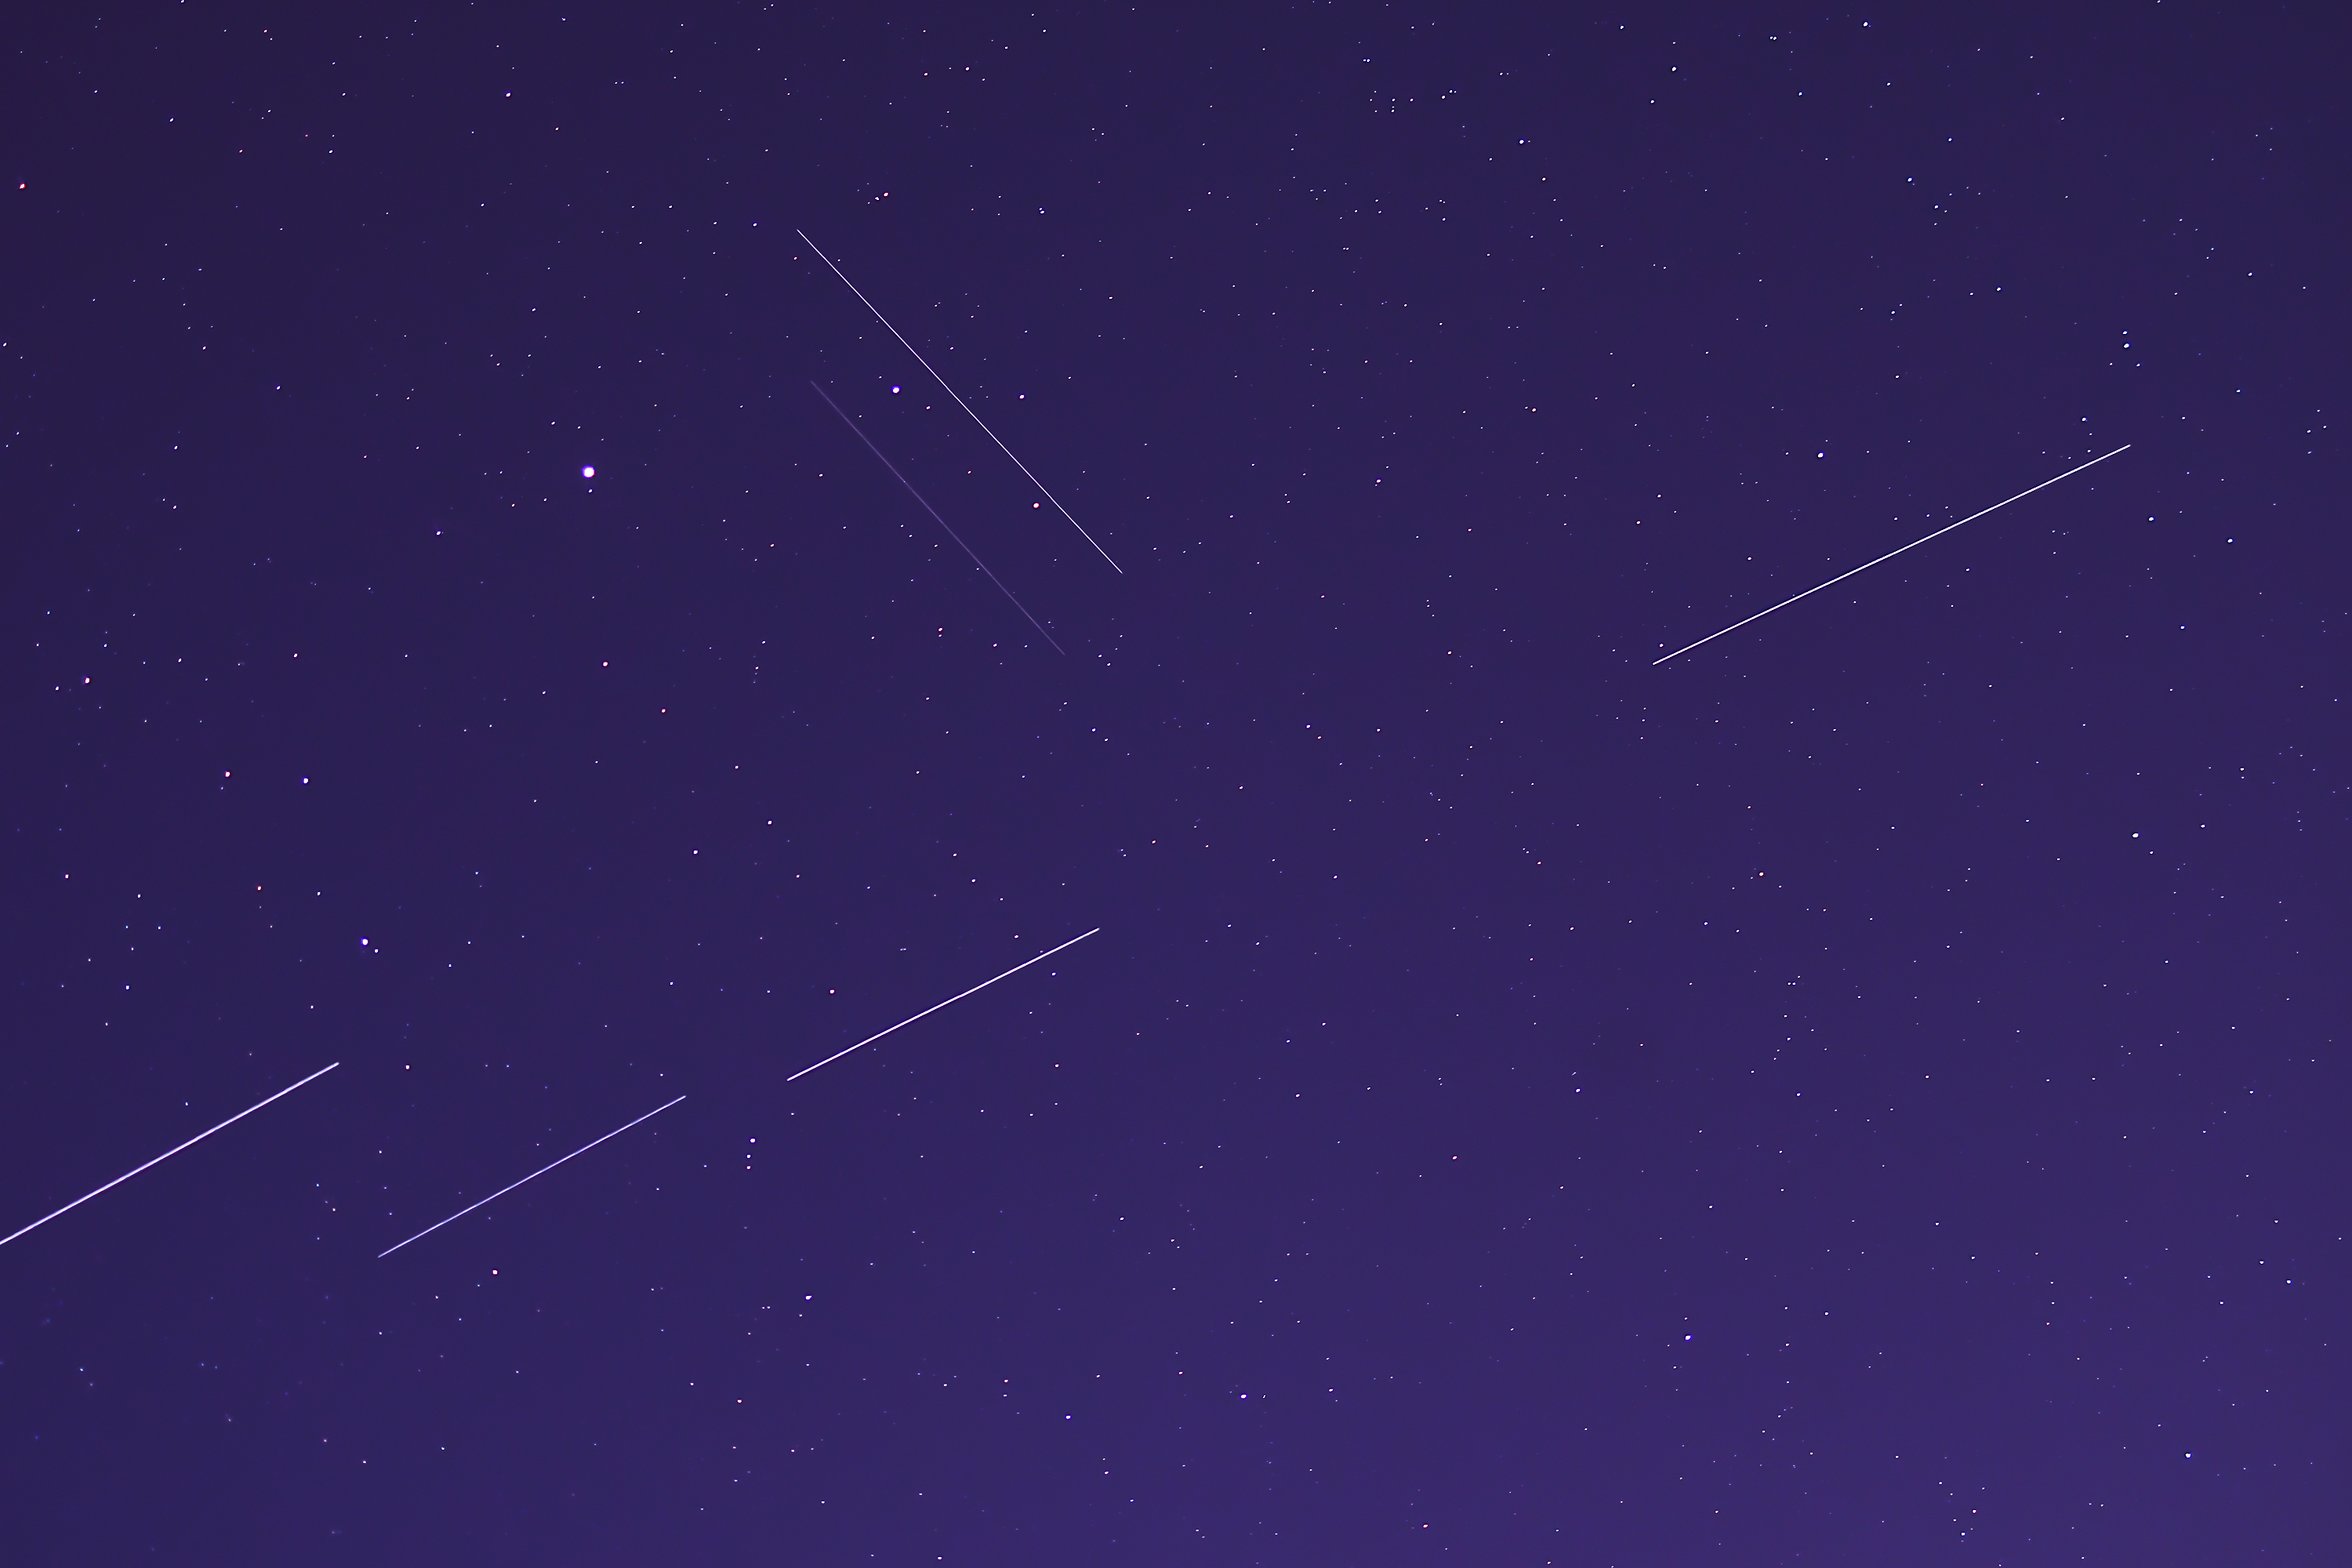 Satellites can leave streaks in the night sky.